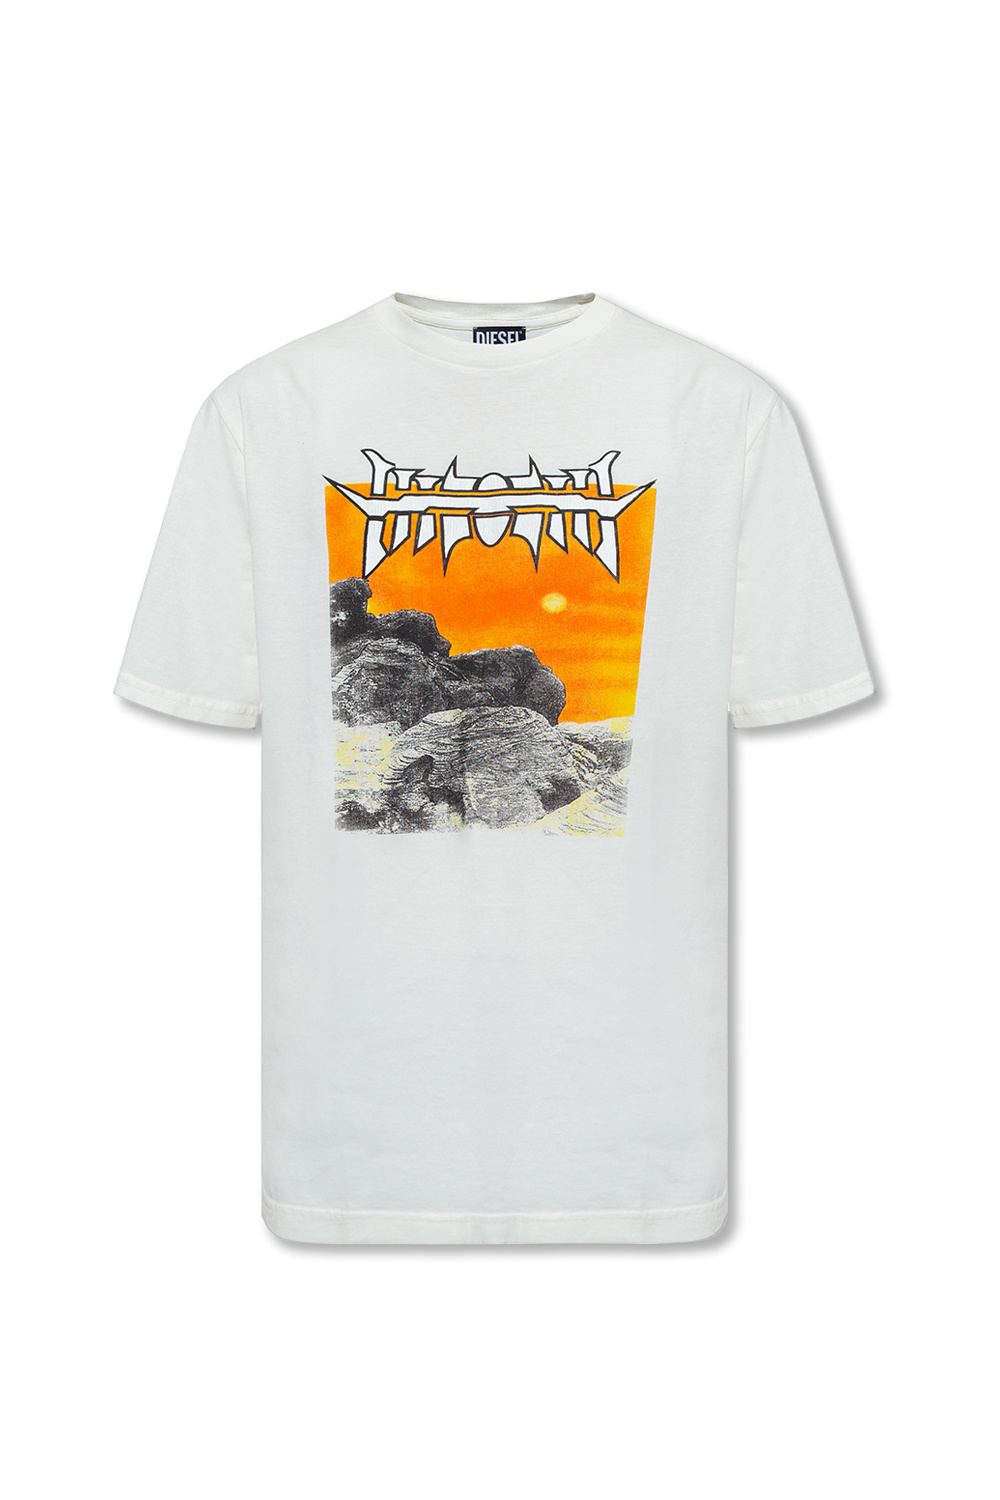 StclaircomoShops | anthracite Diesel Men\'s - clubwear 1 on vsct shirt white Clothing Just\' \'T shirt t - T 2 - printed | melange